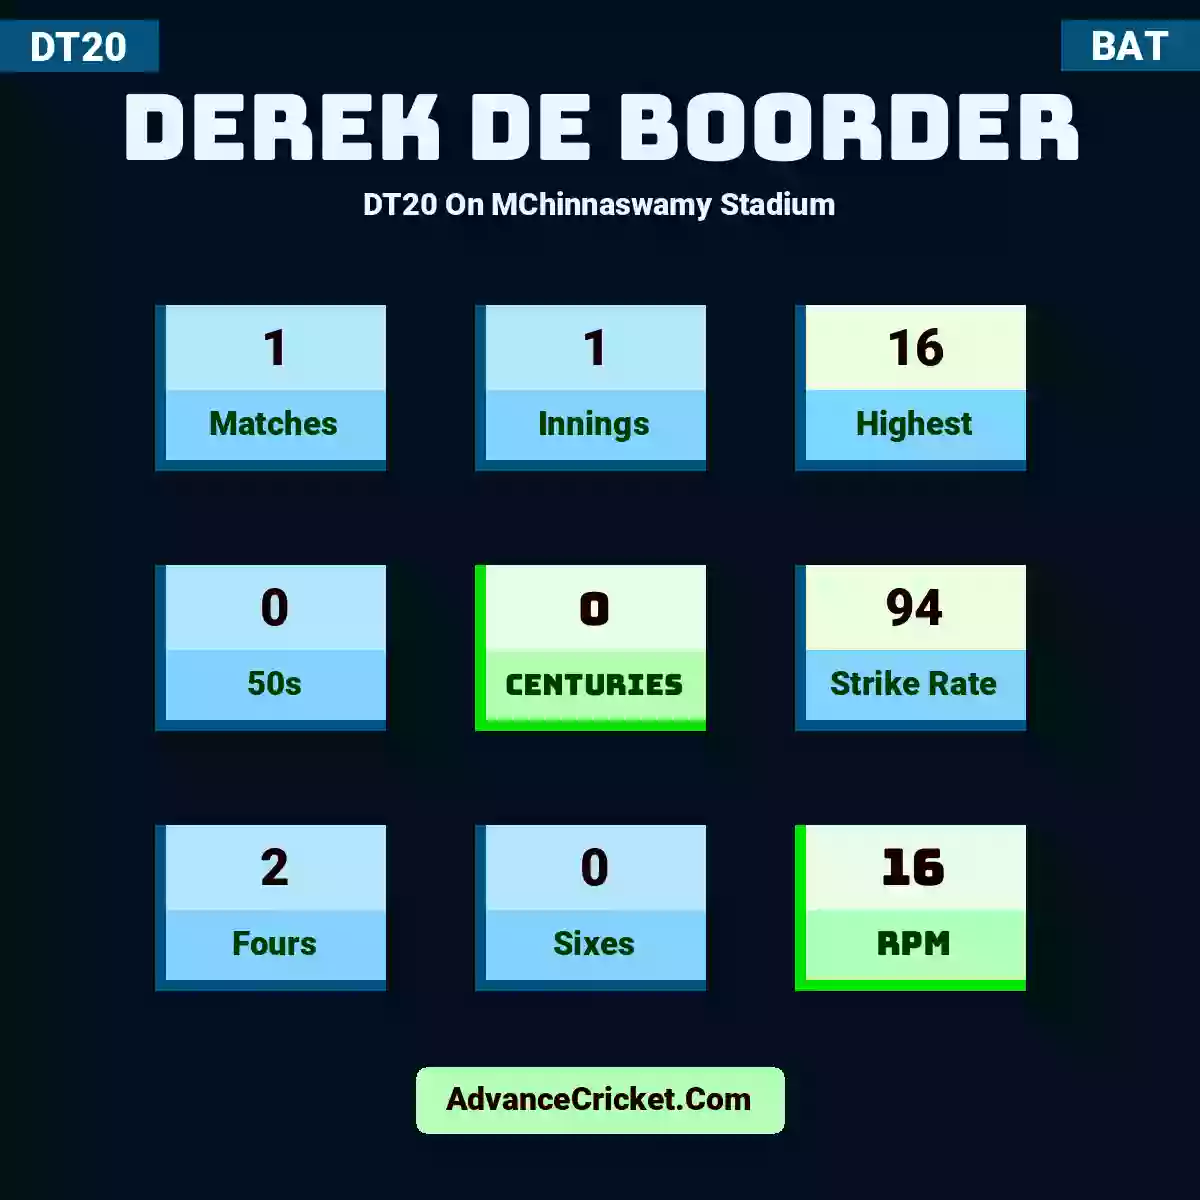 Derek de Boorder DT20  On MChinnaswamy Stadium, Derek de Boorder played 1 matches, scored 16 runs as highest, 0 half-centuries, and 0 centuries, with a strike rate of 94. D.Boorder hit 2 fours and 0 sixes, with an RPM of 16.